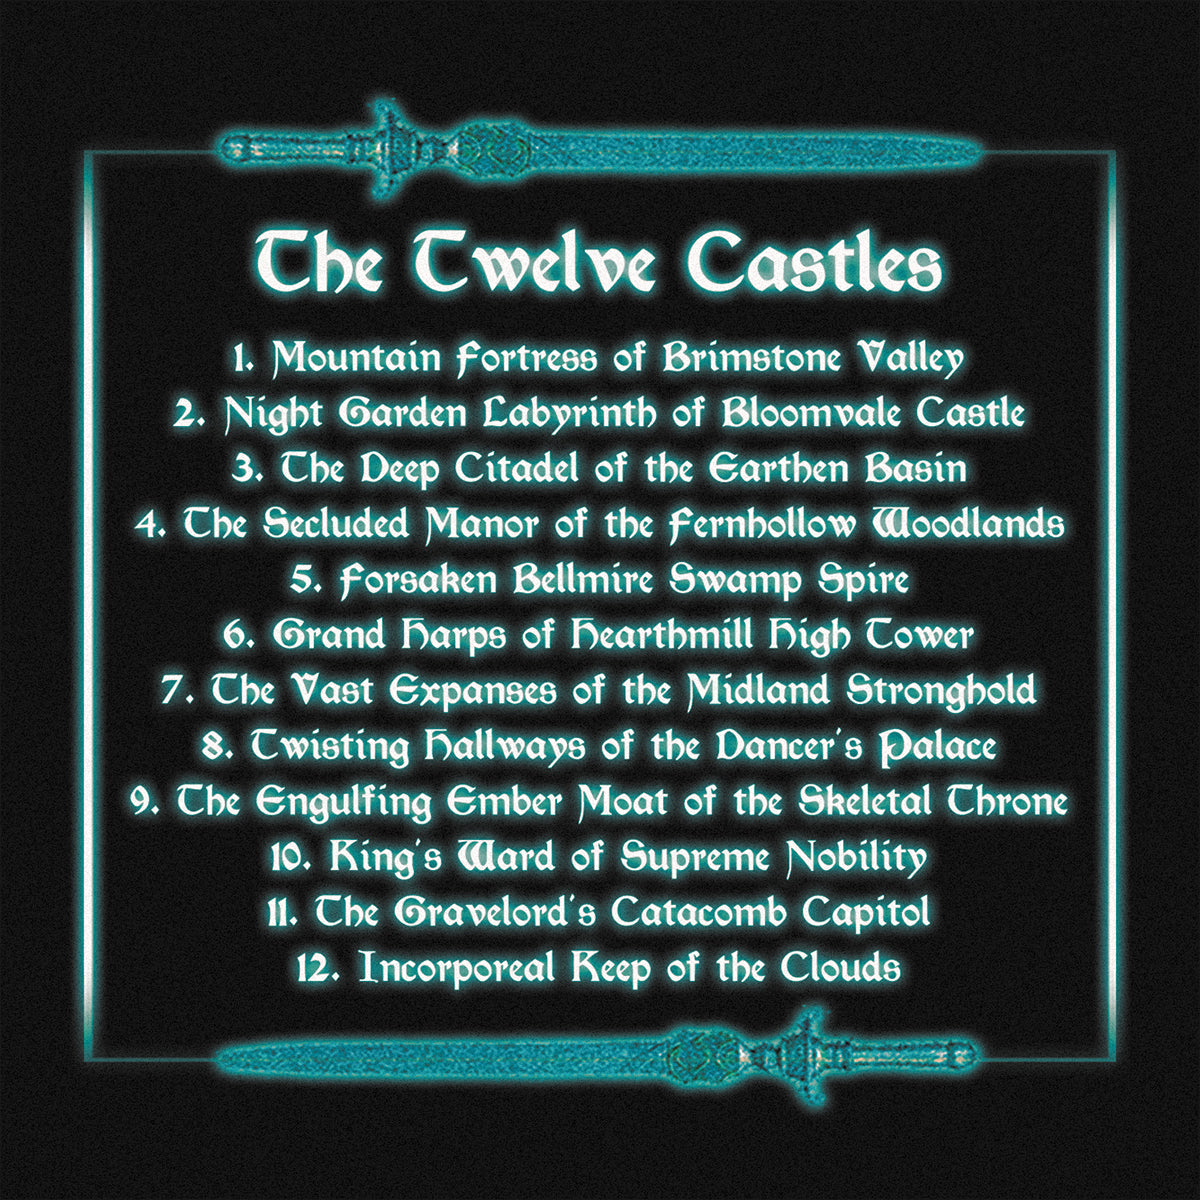 [SOLD OUT] QUEST MASTER "The Twelve Castles" CD [Digipak]